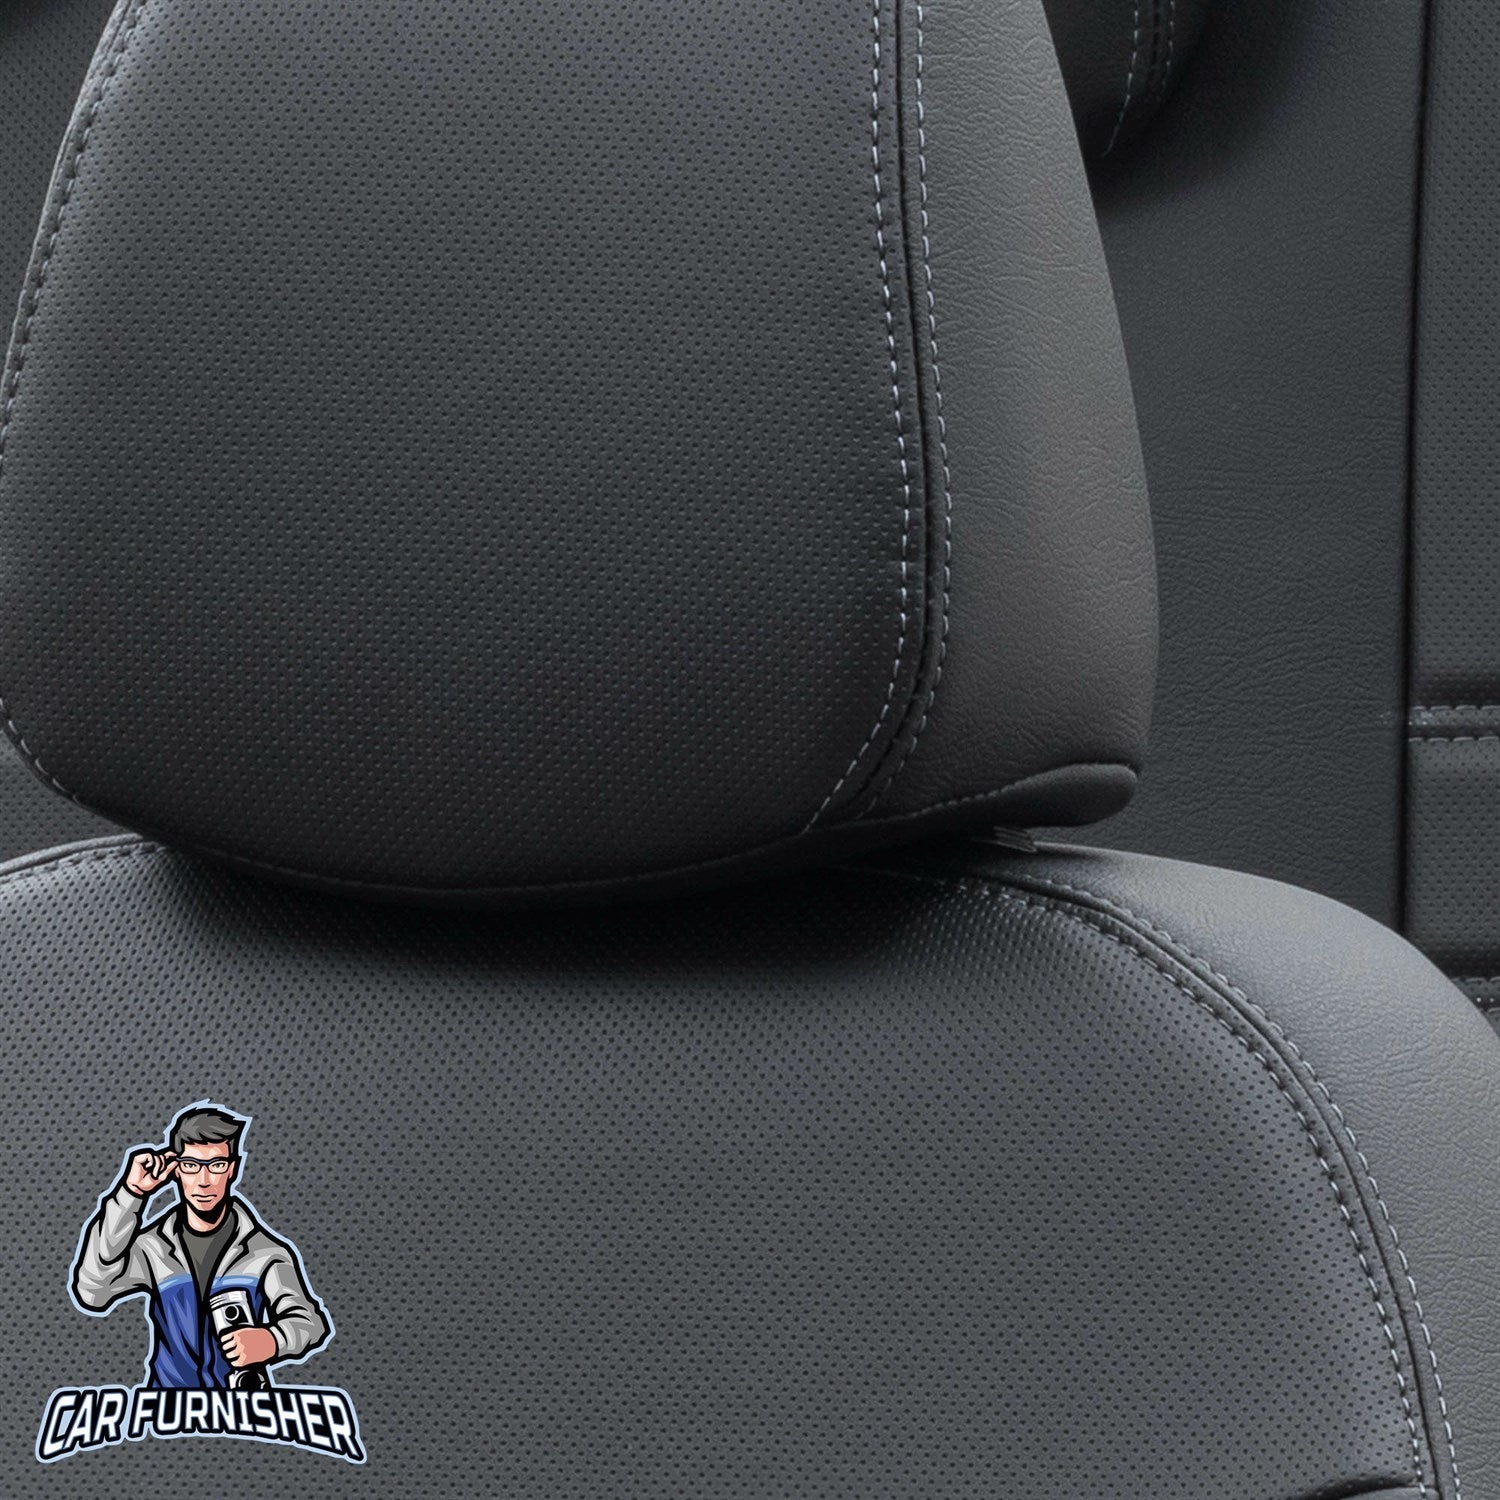 Chevrolet Rezzo Car Seat Covers 2004-2008 CDX/U100 Istanbul Black Full Set (5 Seats + Handrest) Leather & Fabric